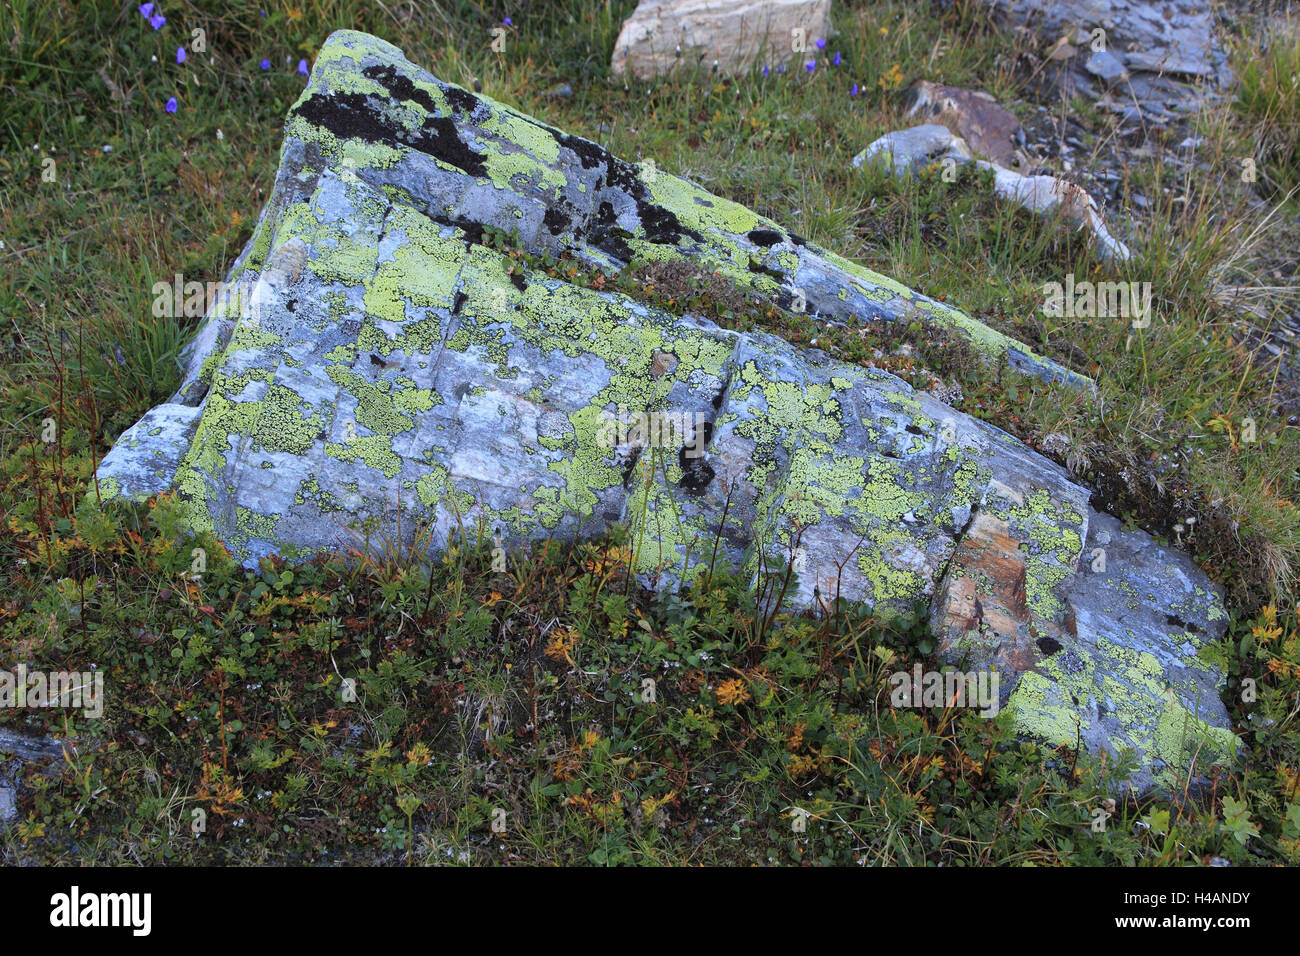 Lichen on stone, Stock Photo